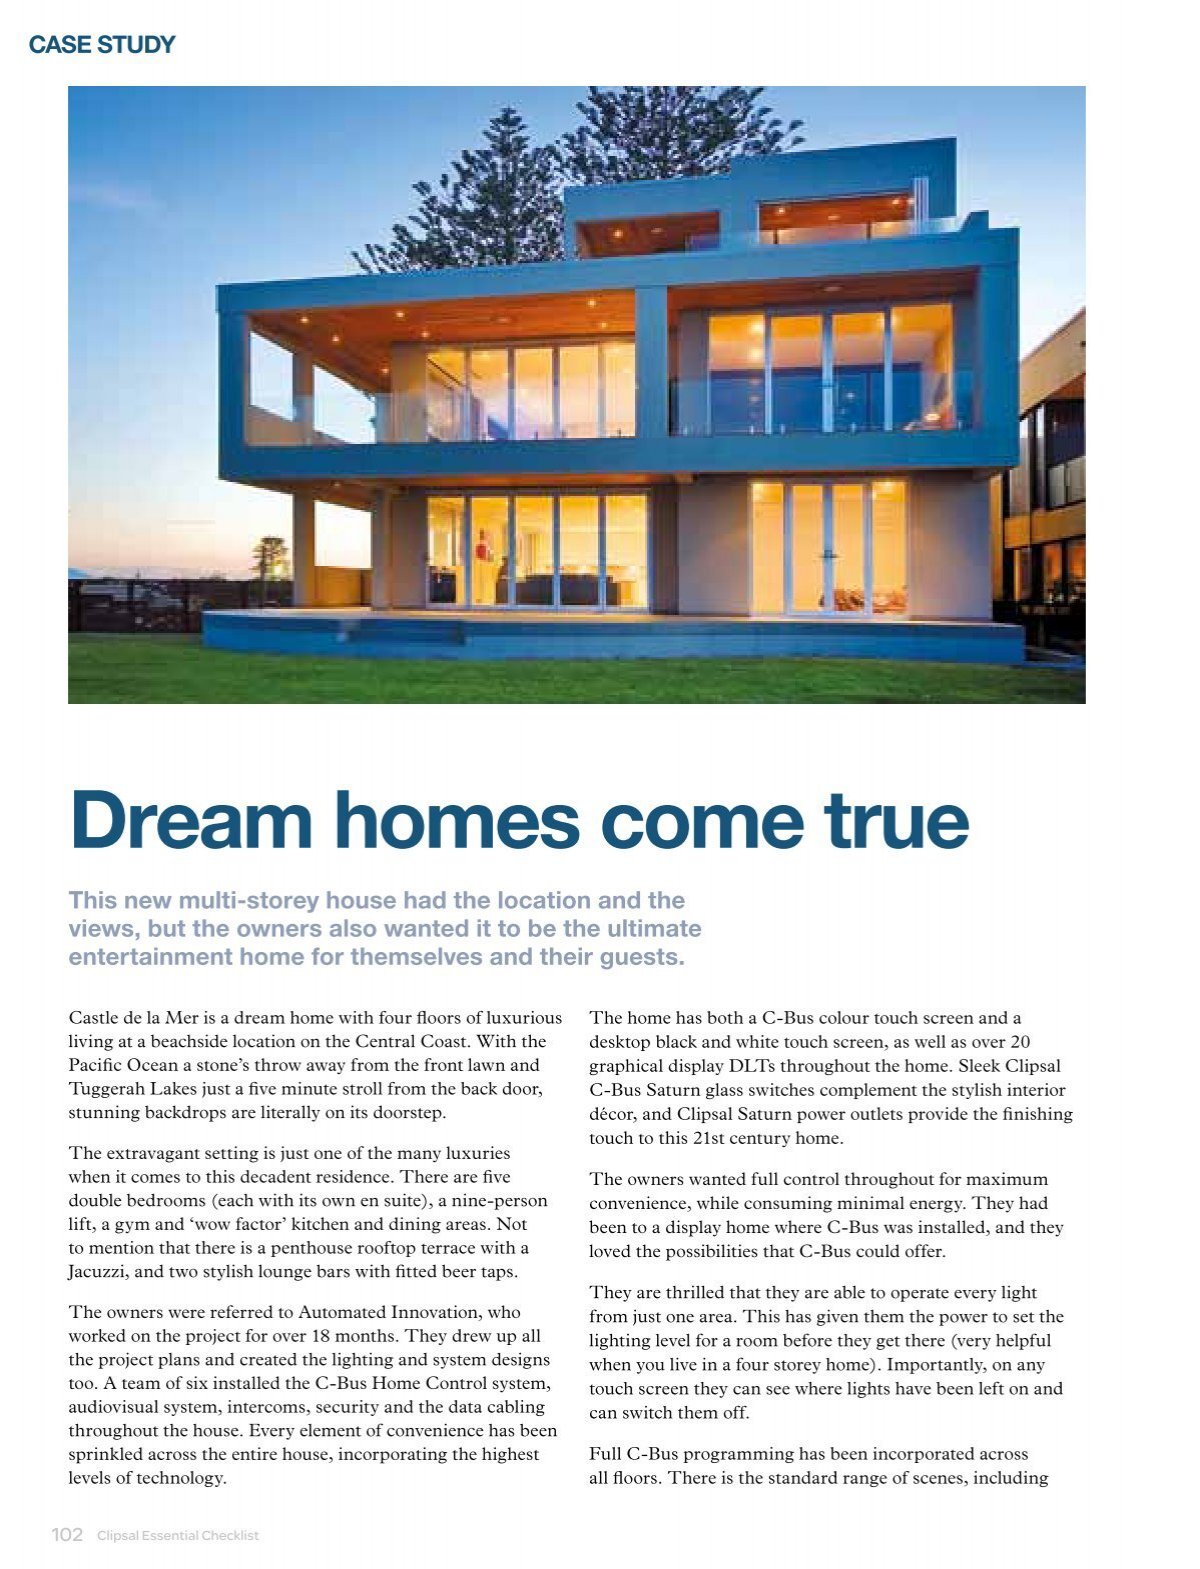 dream home case study pdf